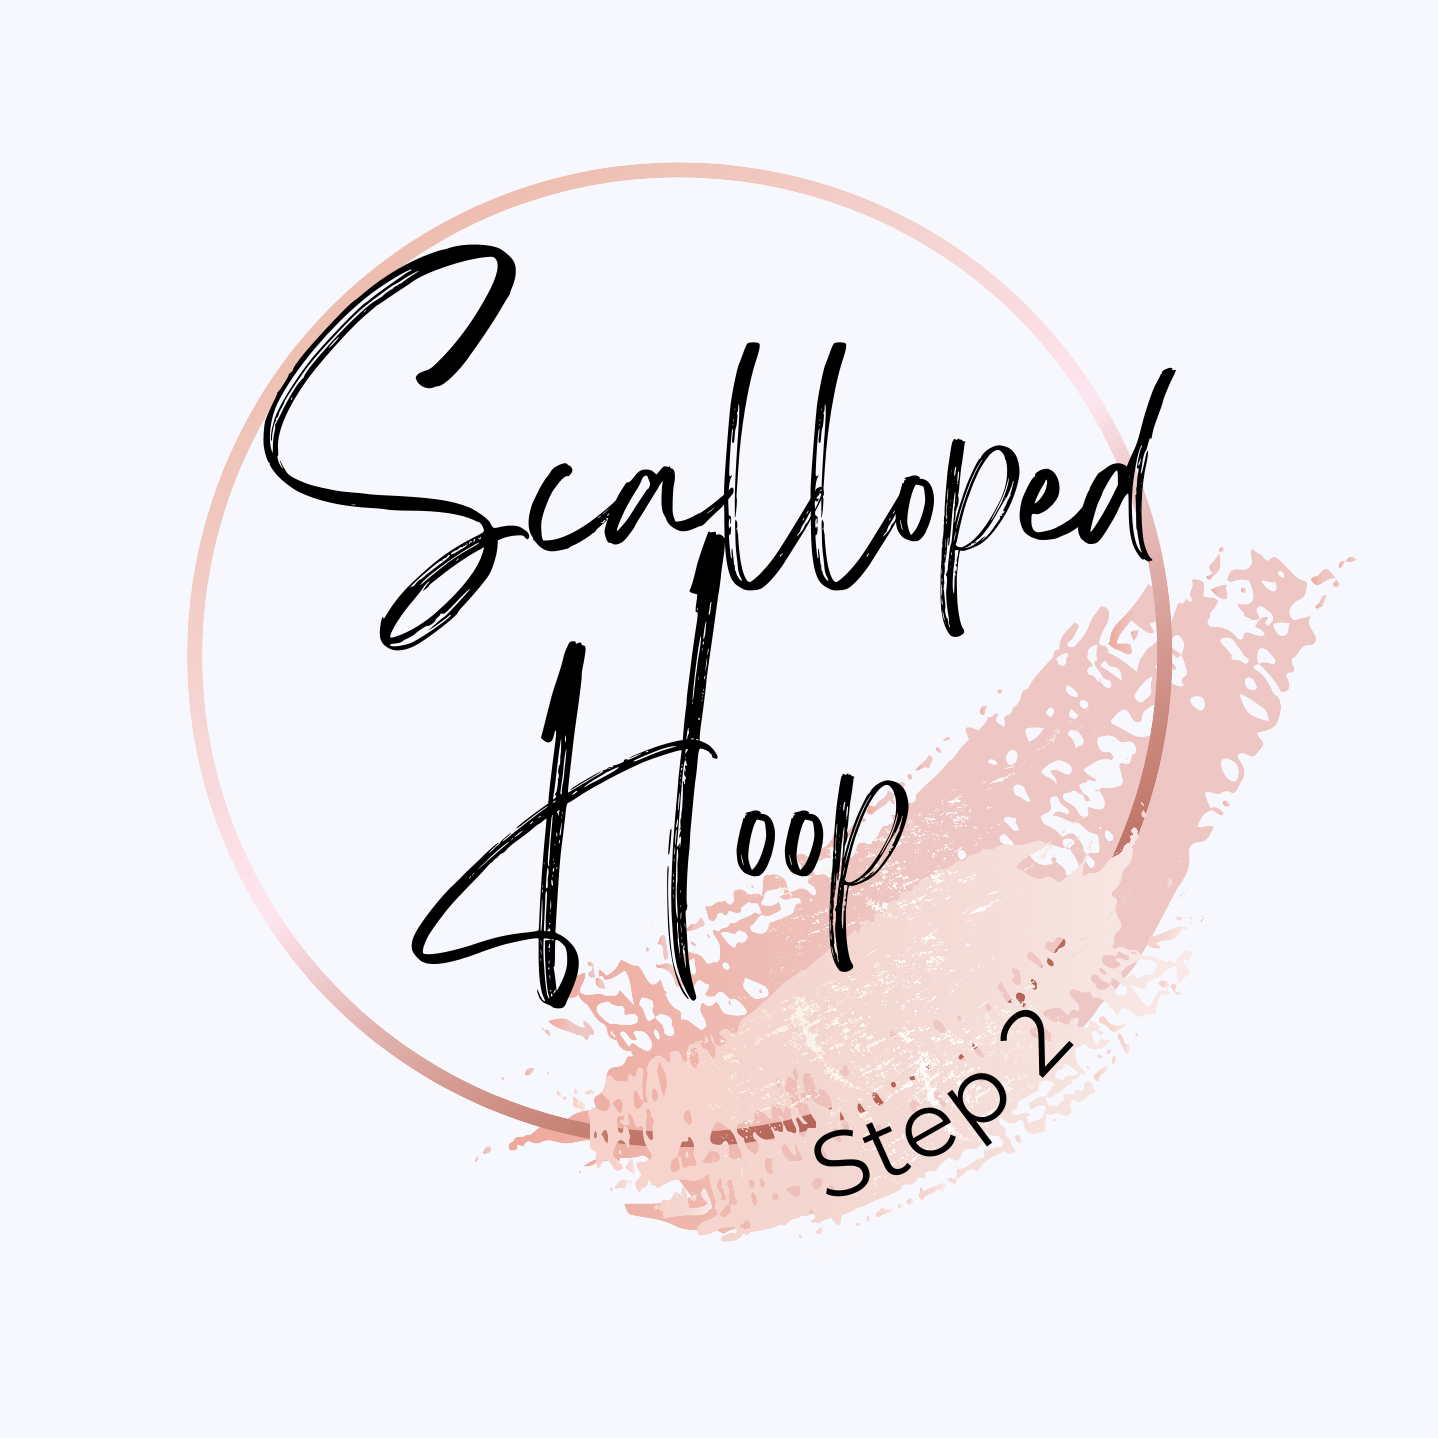 Scalloped Hoop *STEP 2*